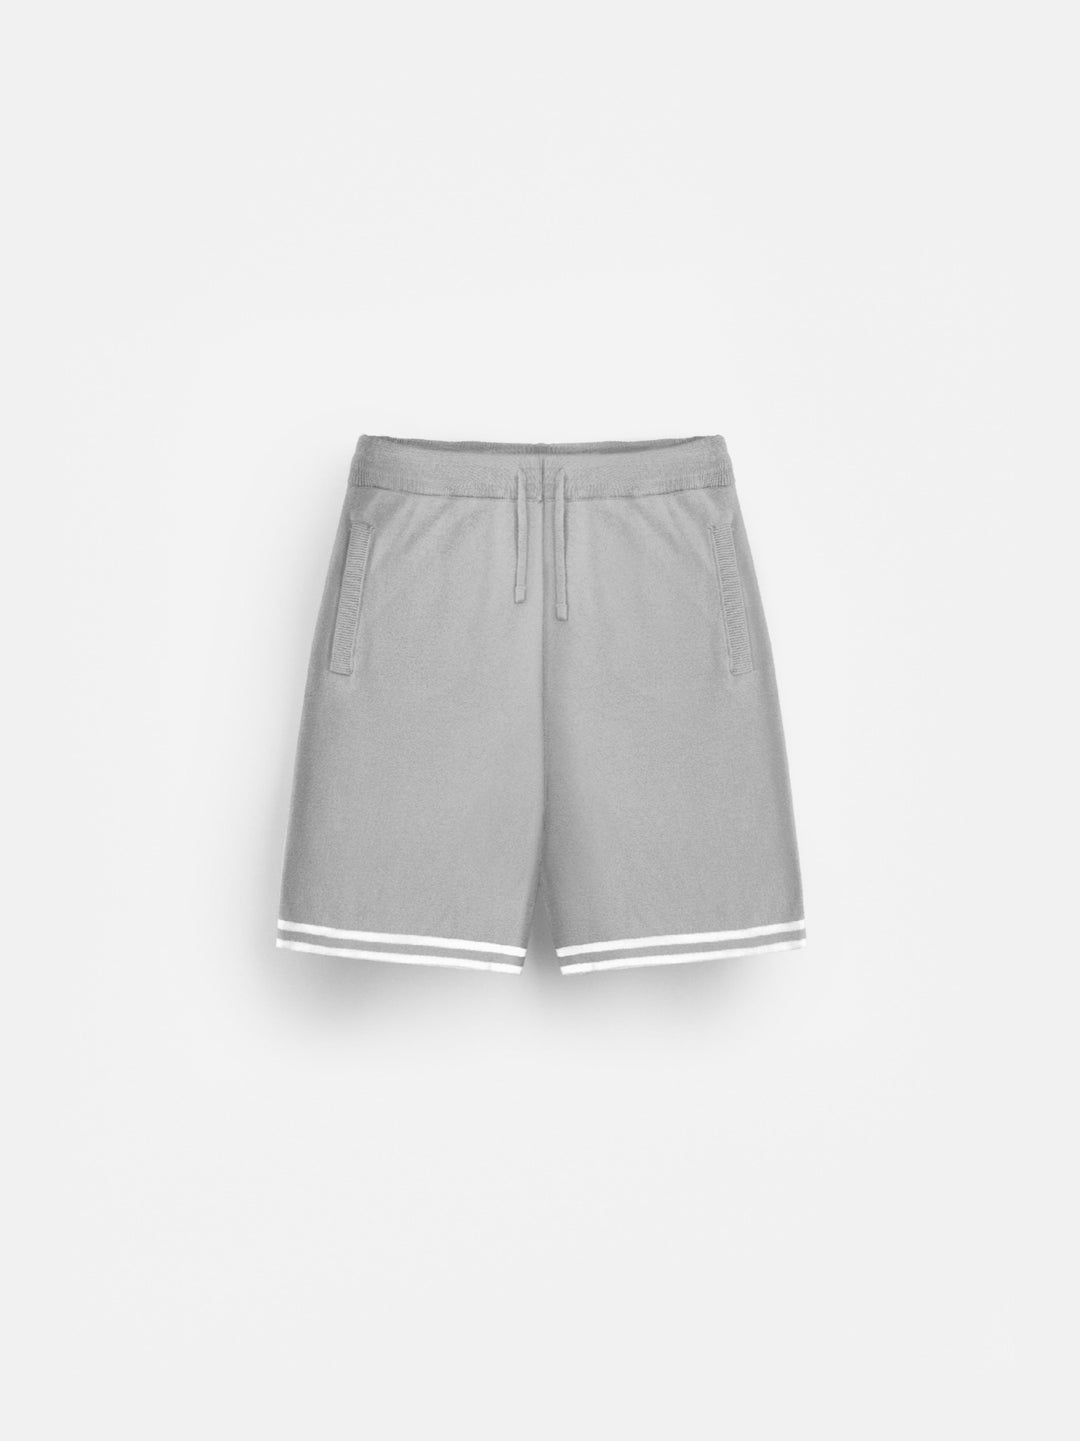 Loose Fit Knit Shorts  - Light Grey